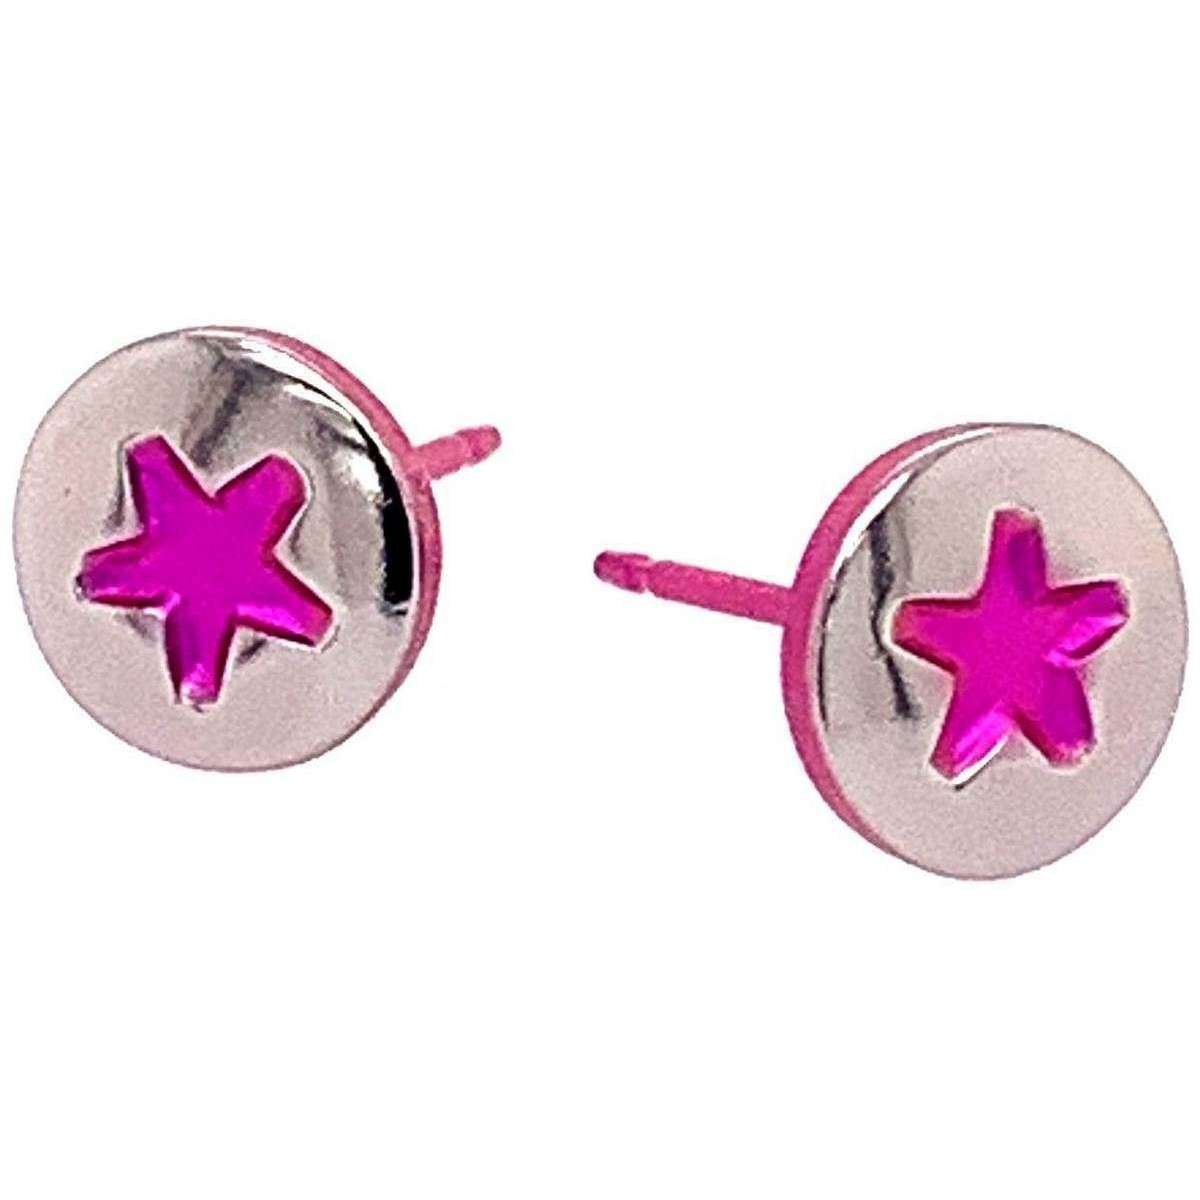 Ti2 Titanium Star Stud Earrings - Pink